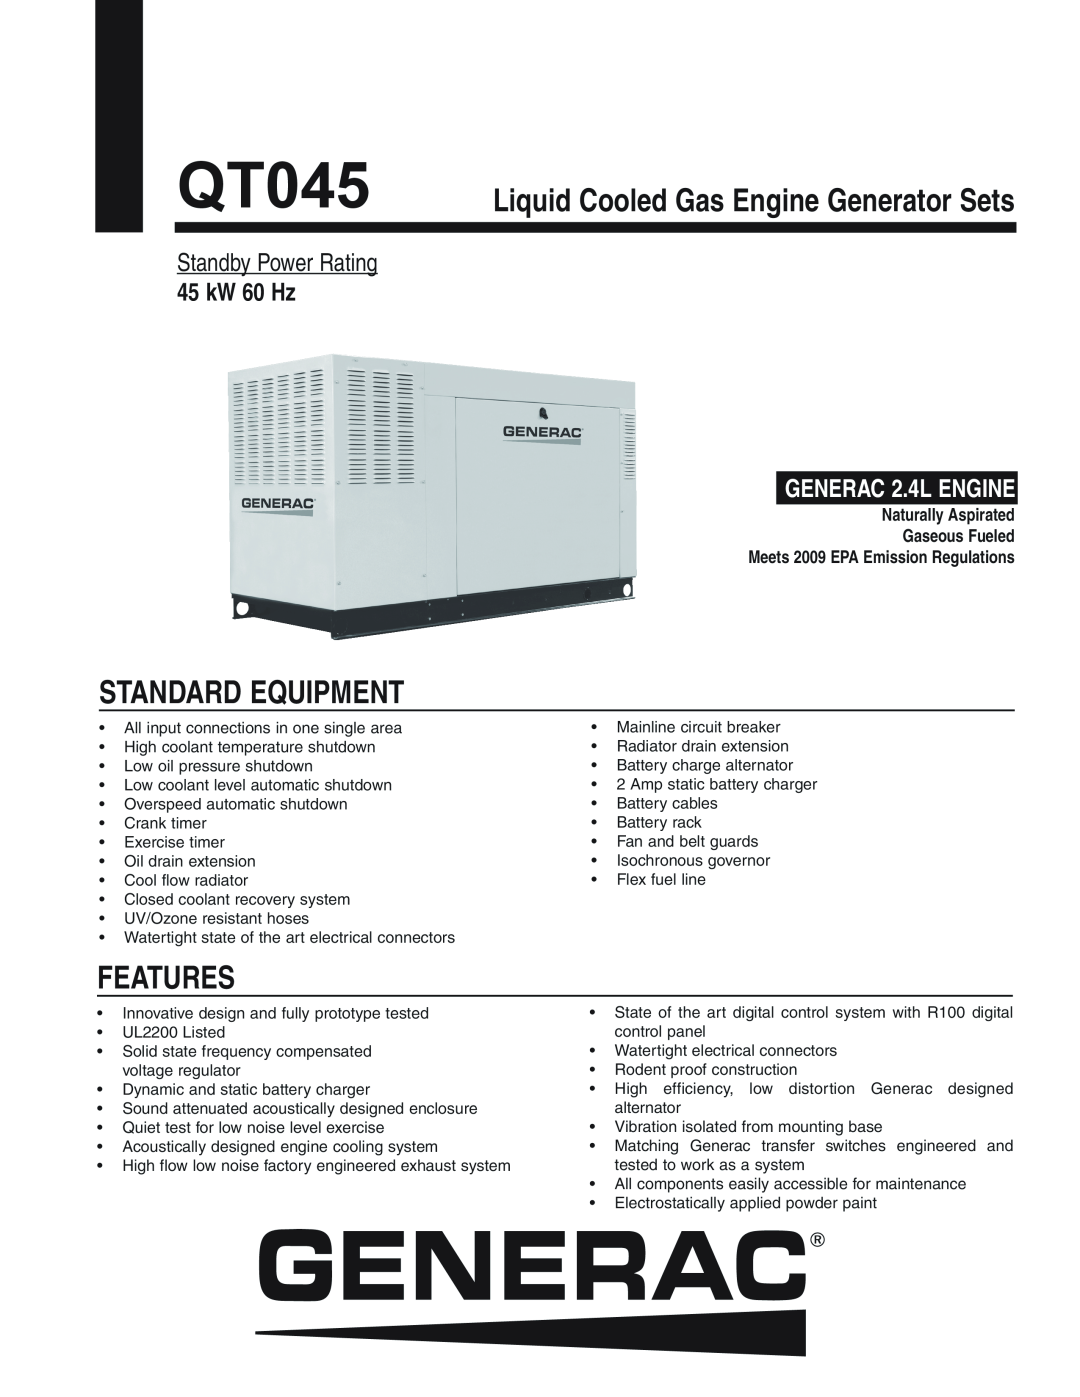 Generac QT04524KNSX manual Liquid Cooled Gas Engine Generator Sets, Standby Power Rating, 45 kW 60 Hz, GENERAC 2.4L ENGINE 